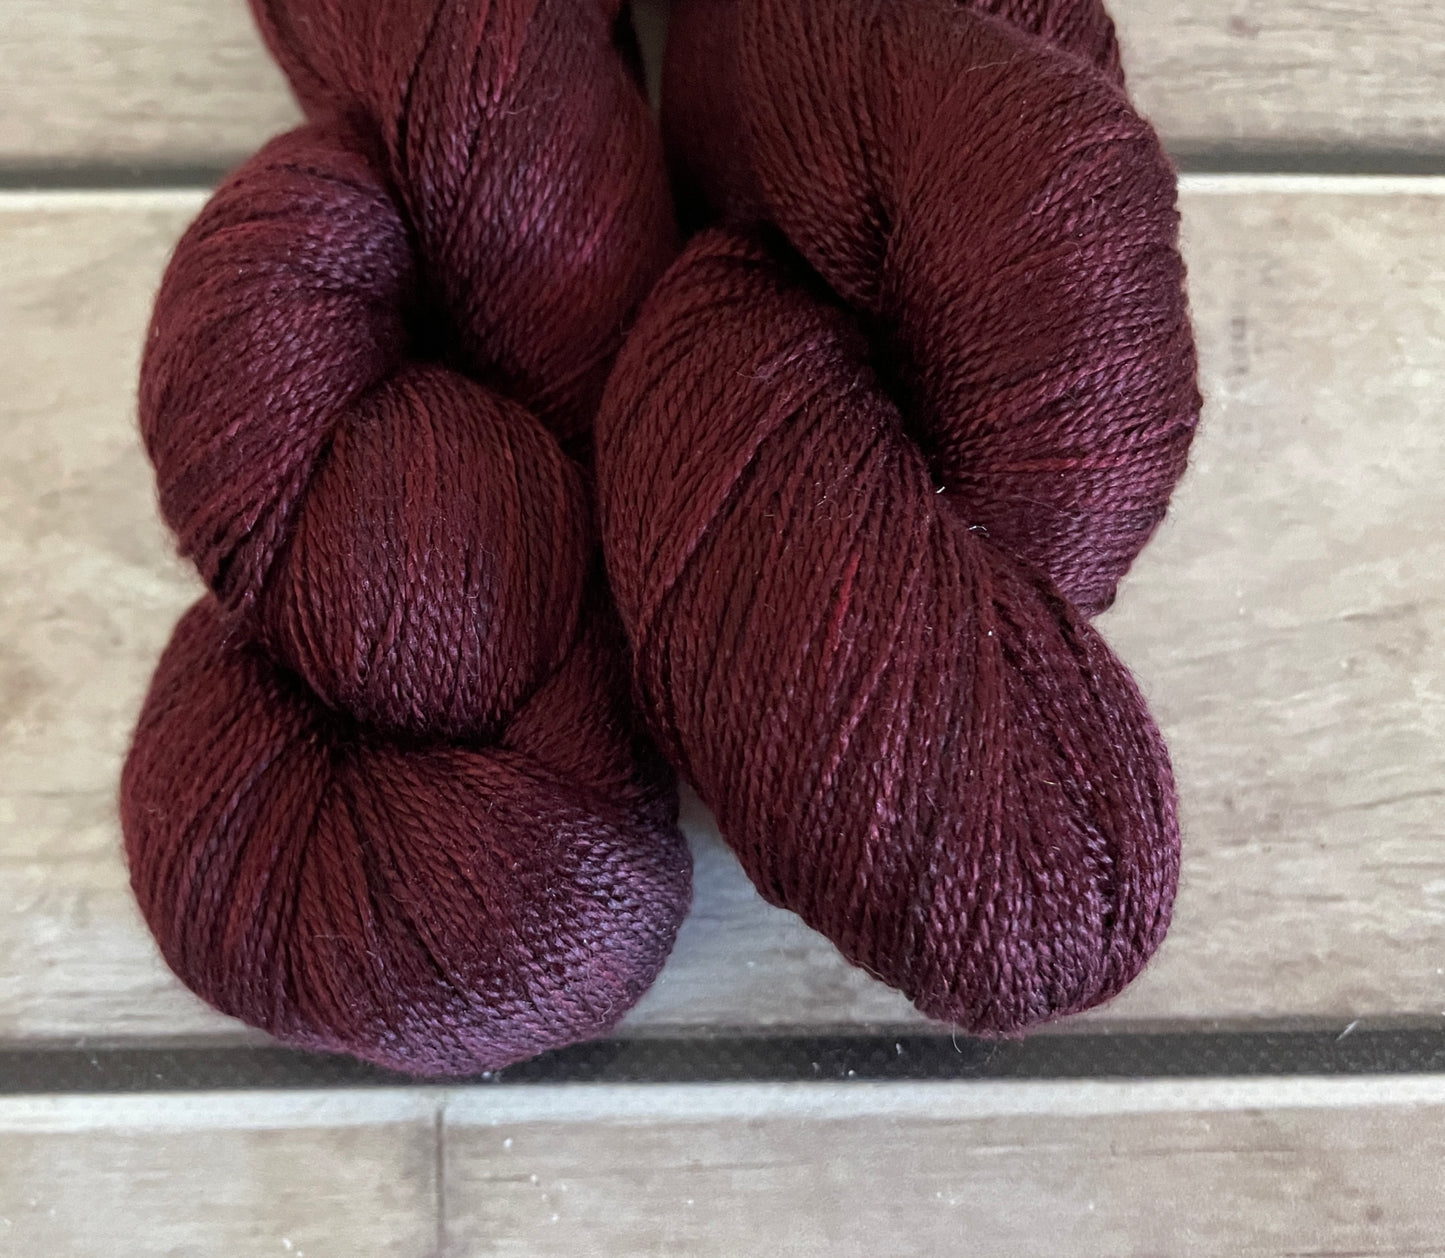 Ruby Wine - 3 ply pure silk yarn - Ginseng hl